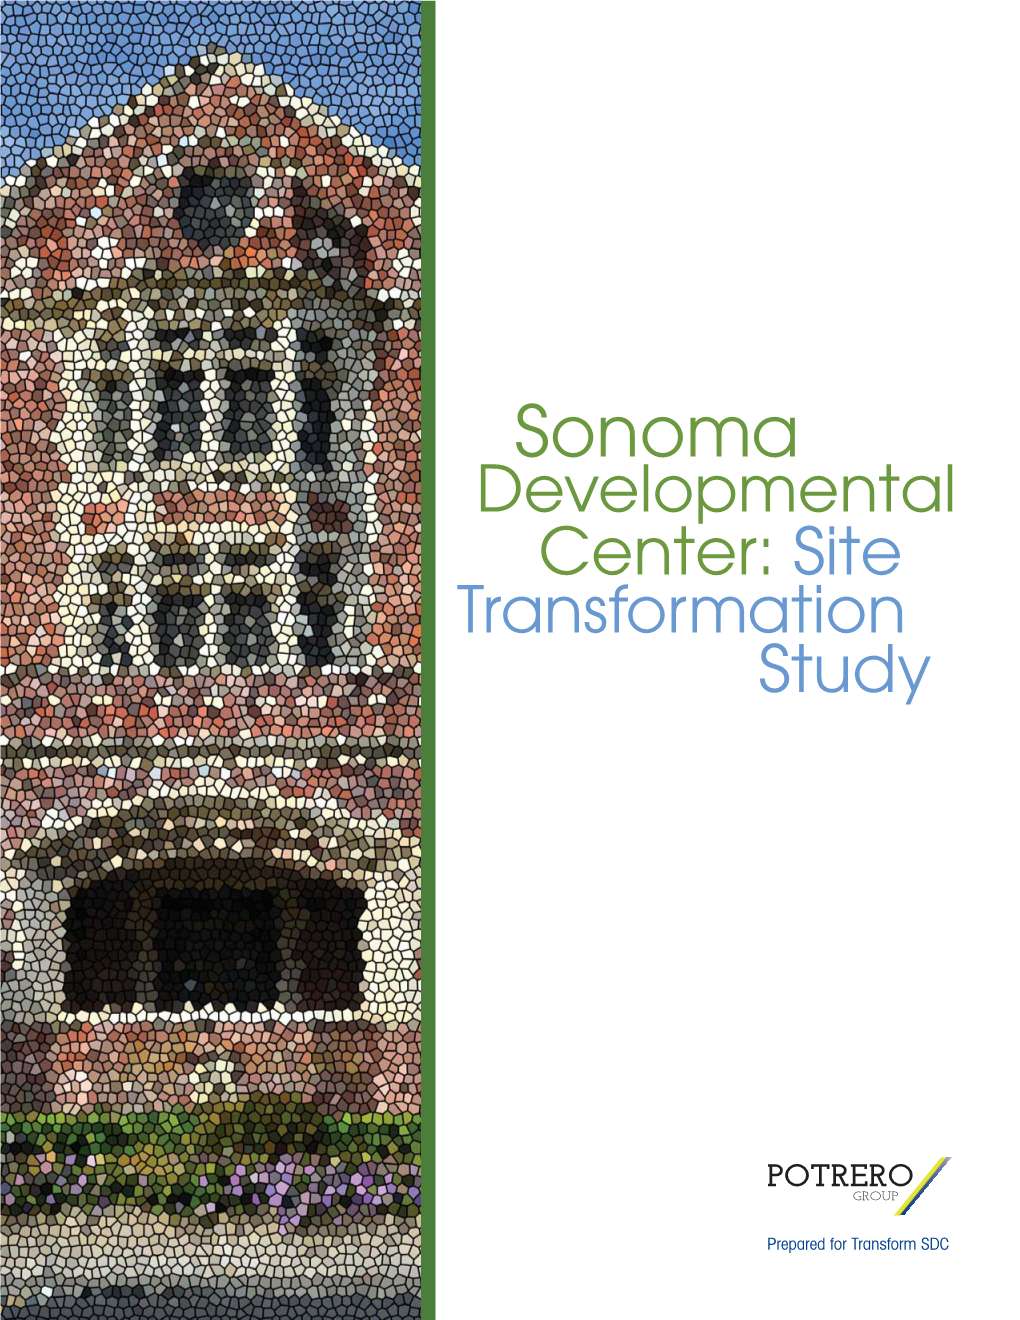 The Sonoma Developmental Center: Site Transformation Study